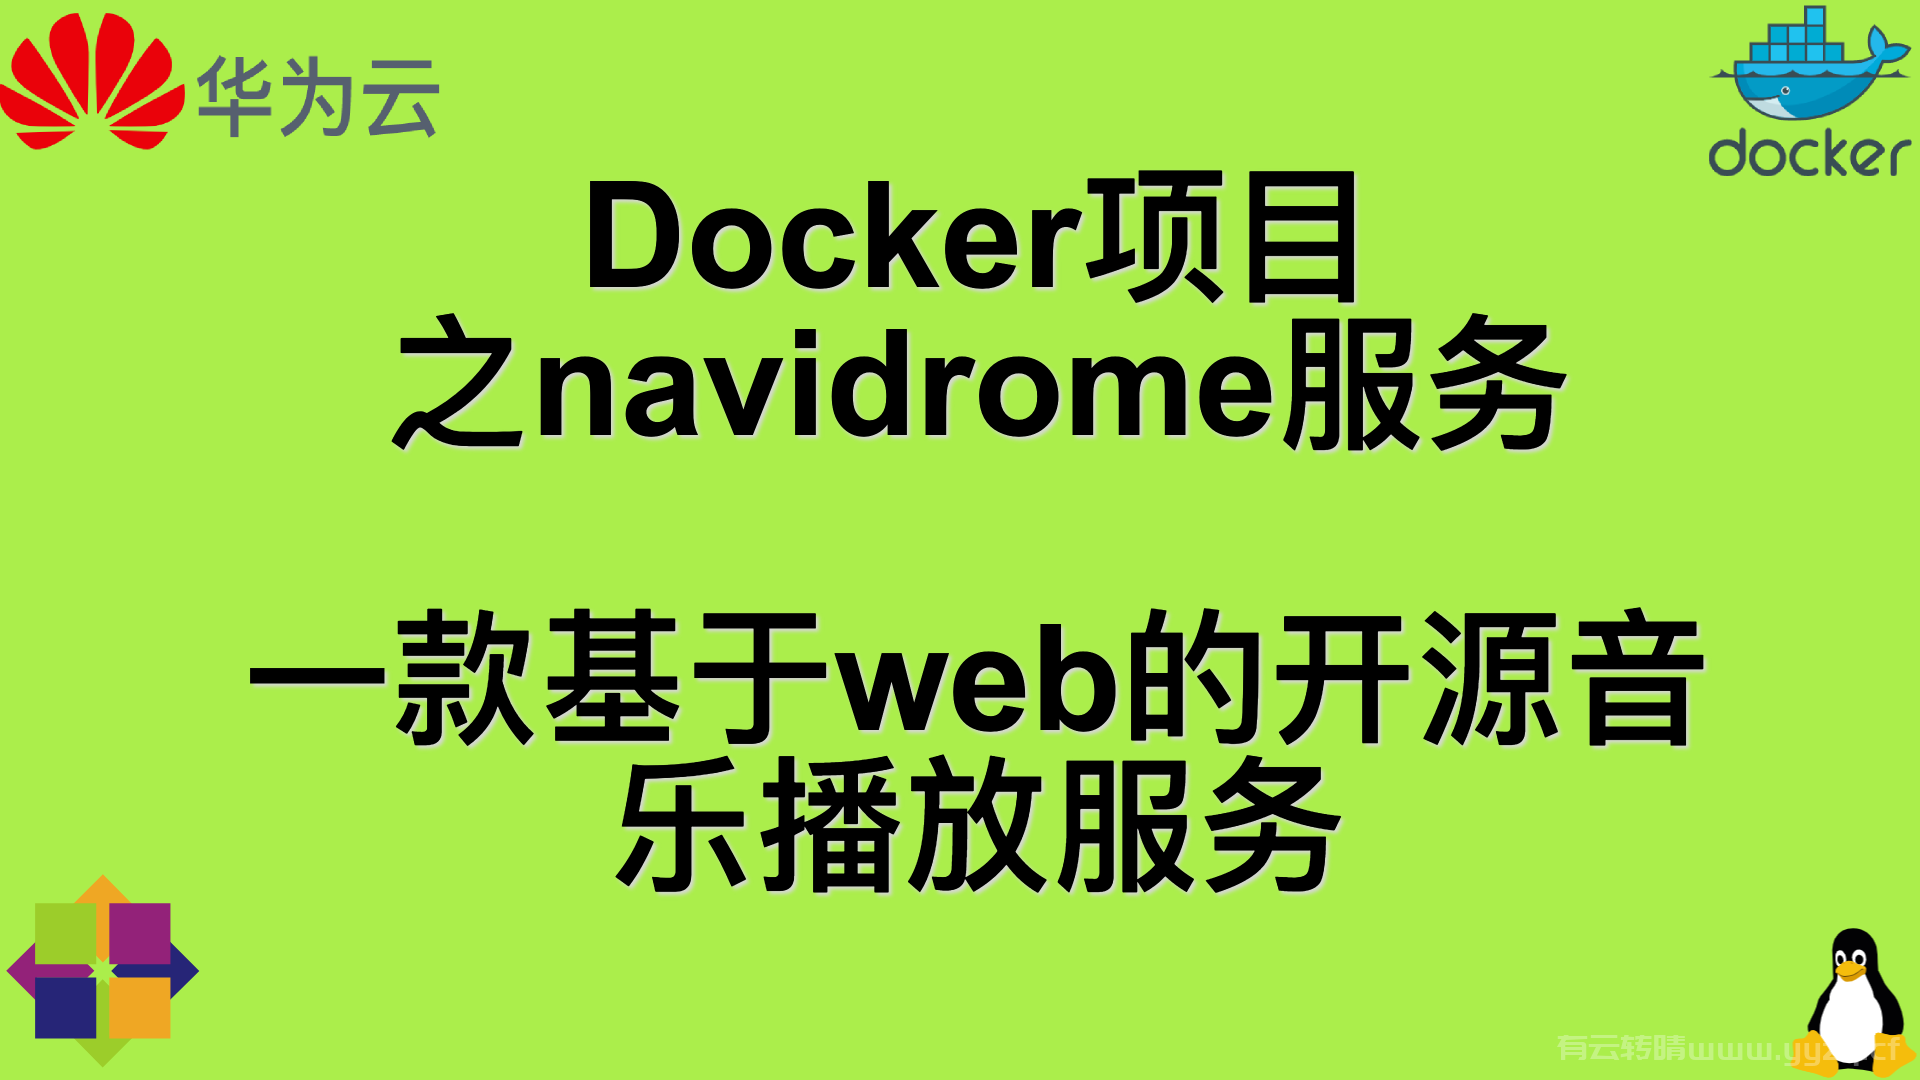 Docker项目之navidrome服务,一款基于web的开源音乐播放服务，可以在任何浏览器直接访问，打造属于自己的云音乐平台。